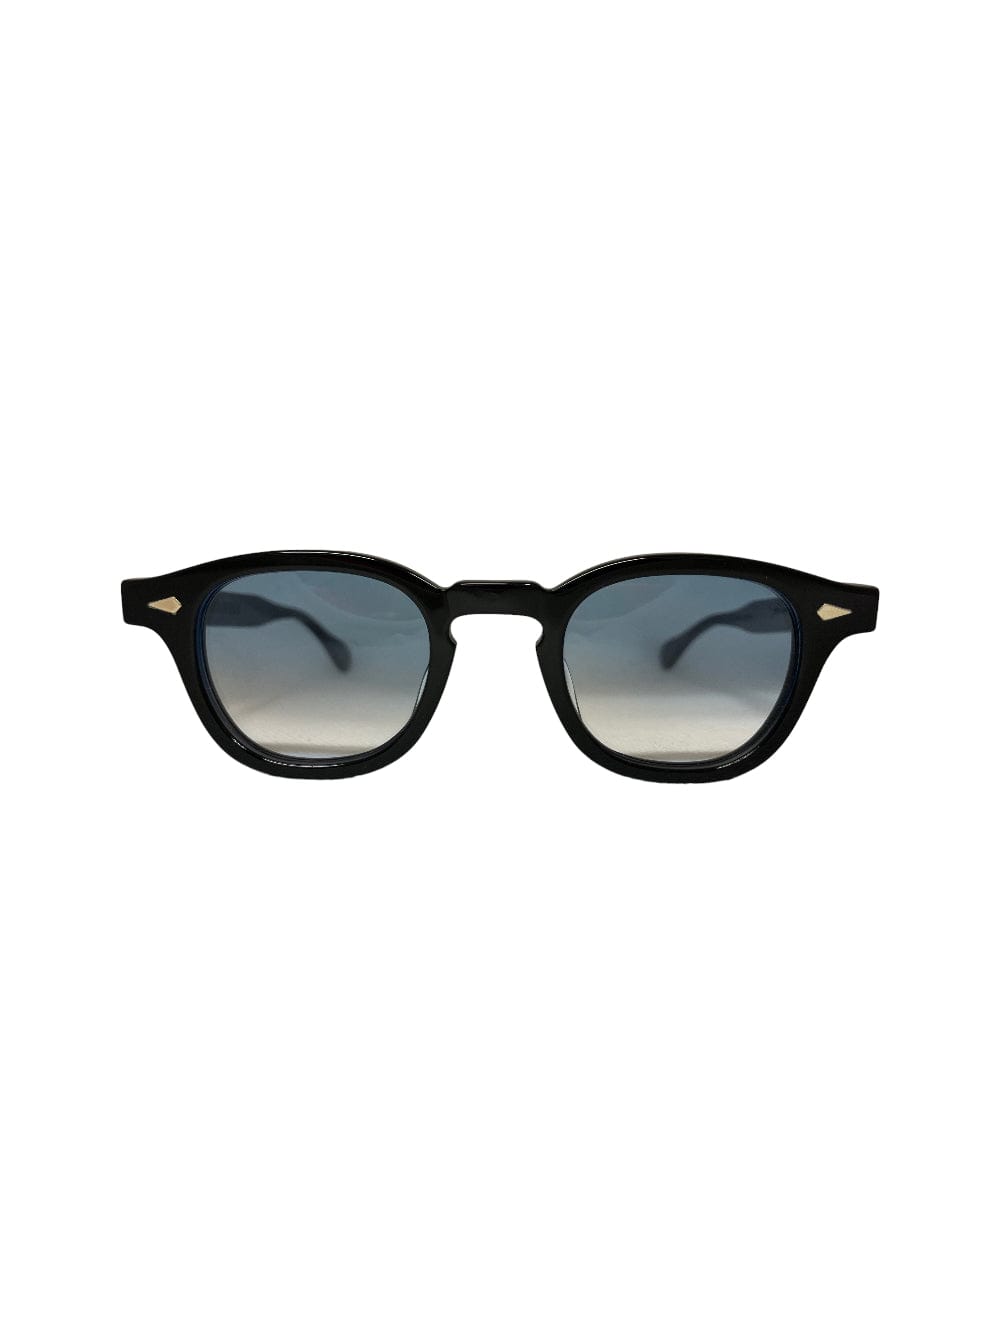 Julius Tart Optical Ar - 44/24 - Black Sunglasses | ModeSens